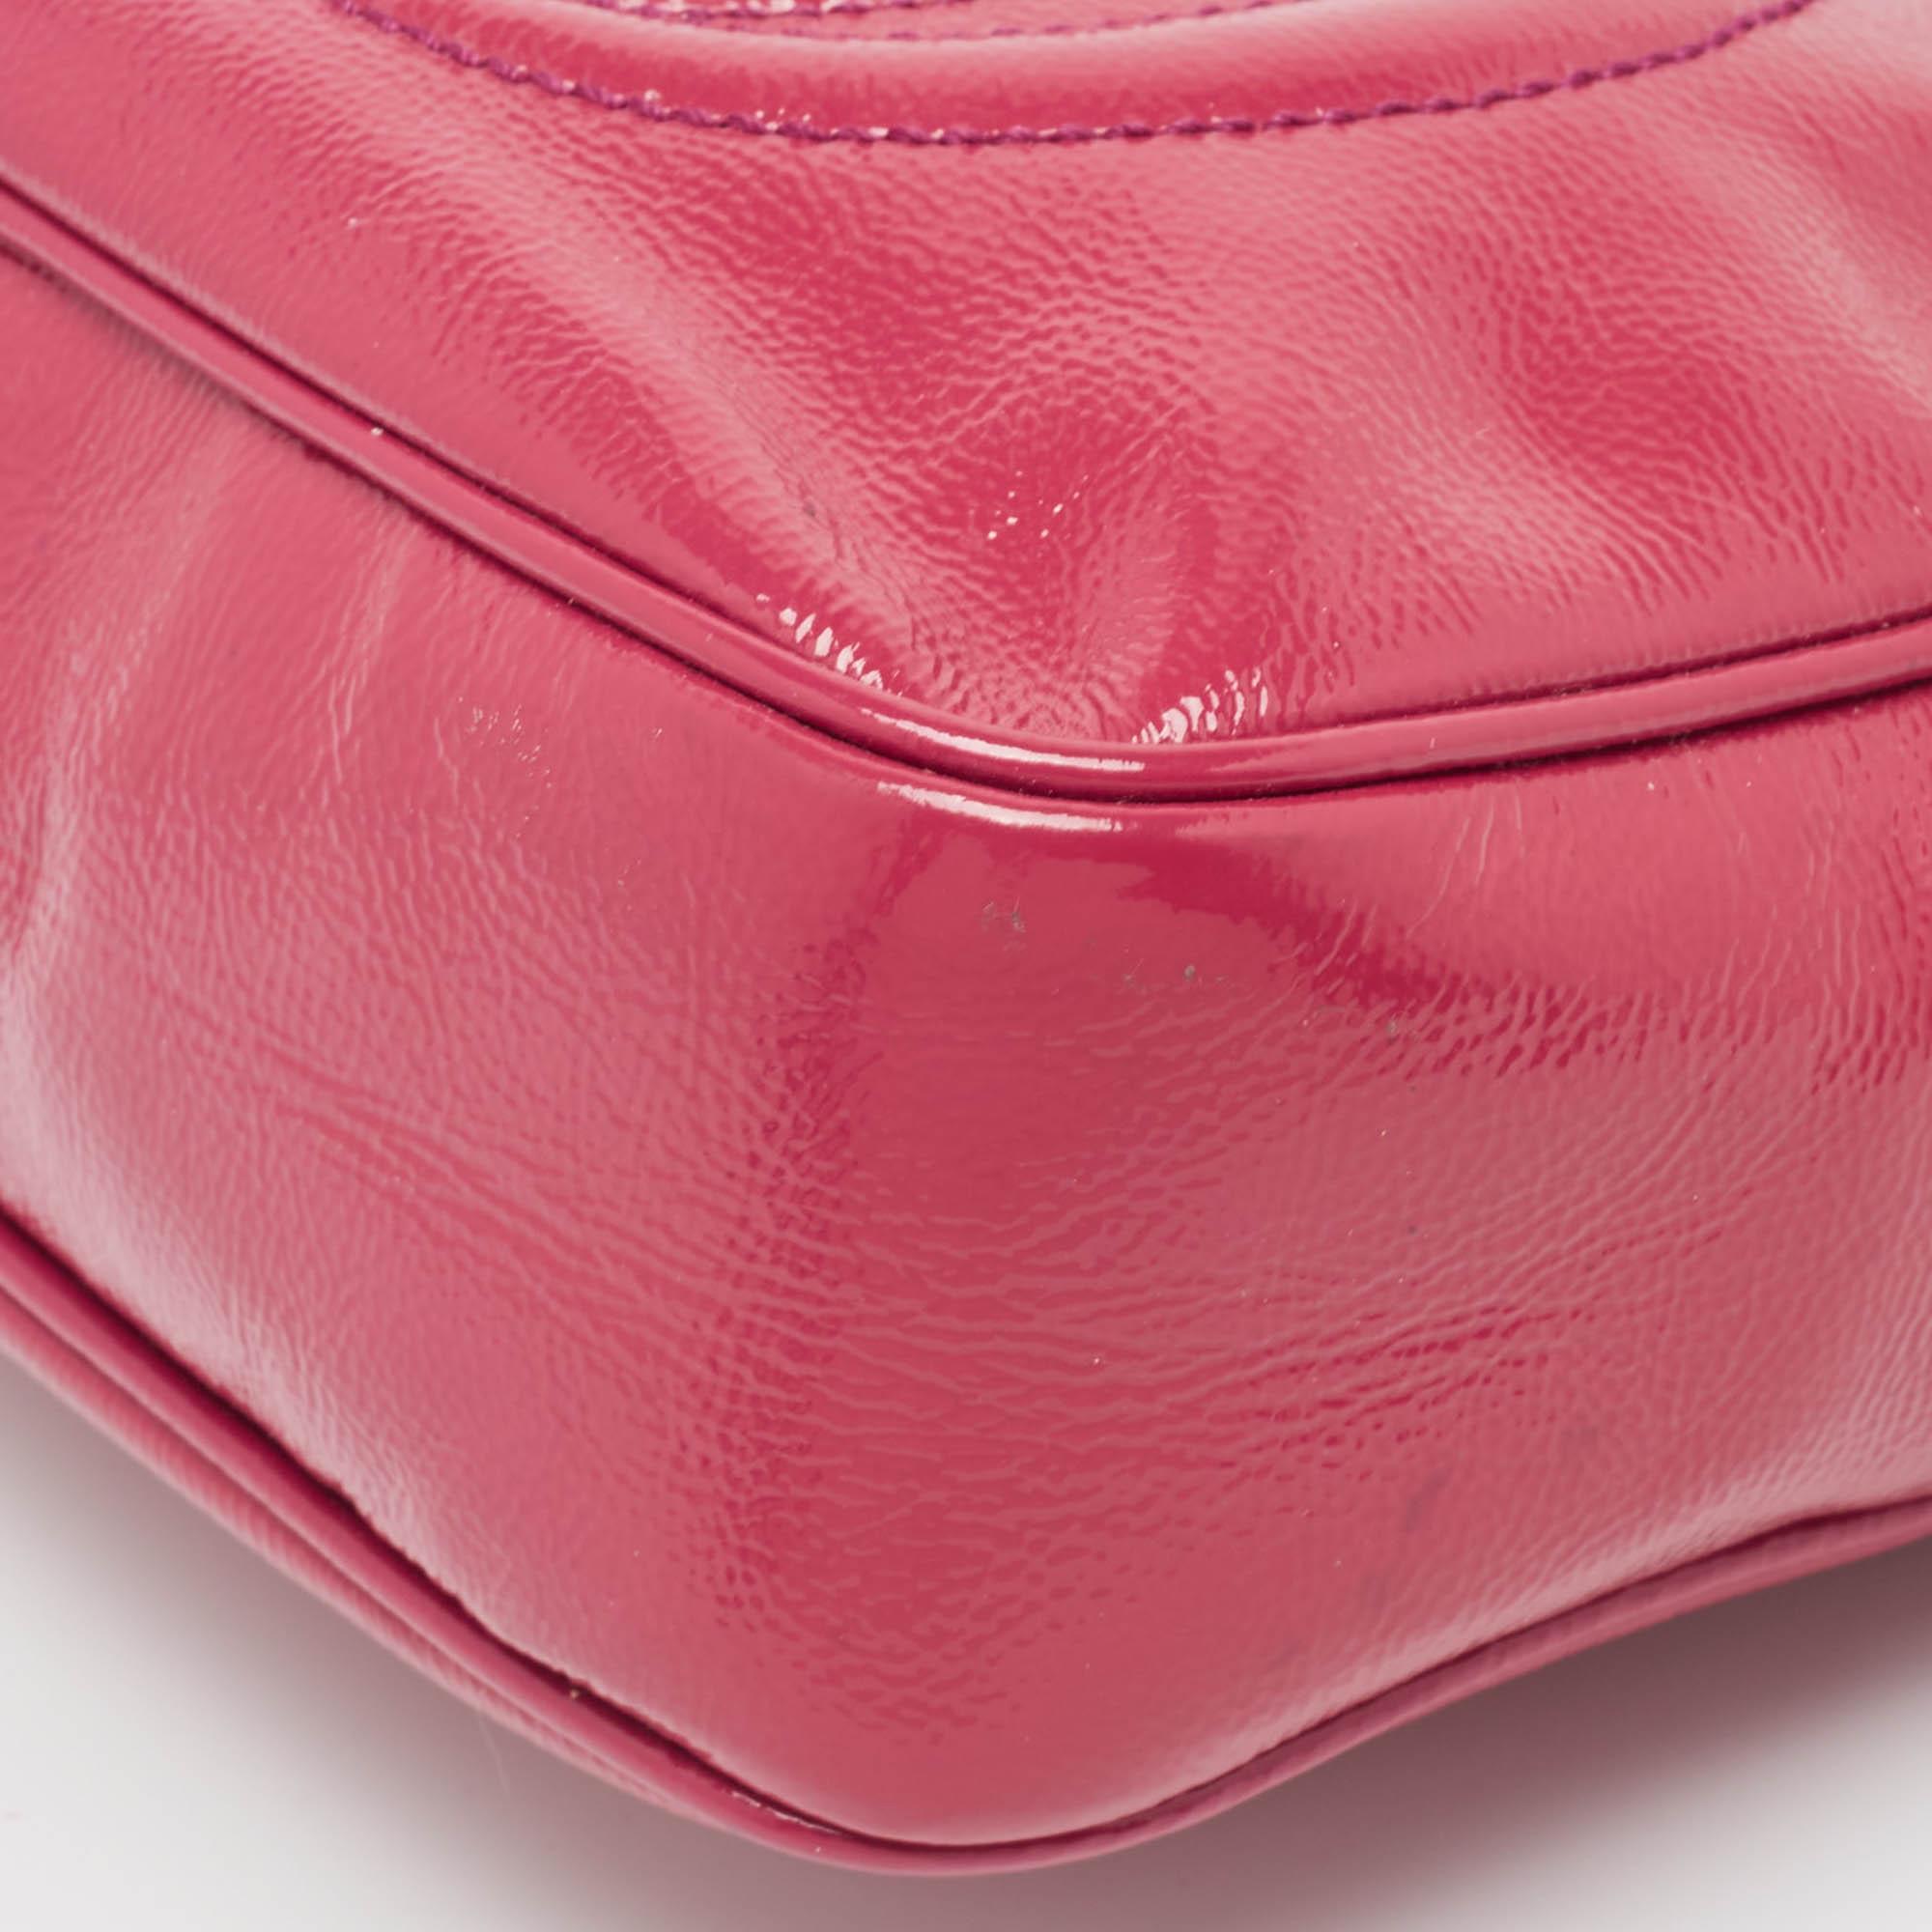 Gucci Fuchsia Patent Leather Small Soho Disco Crossbody Bag 5